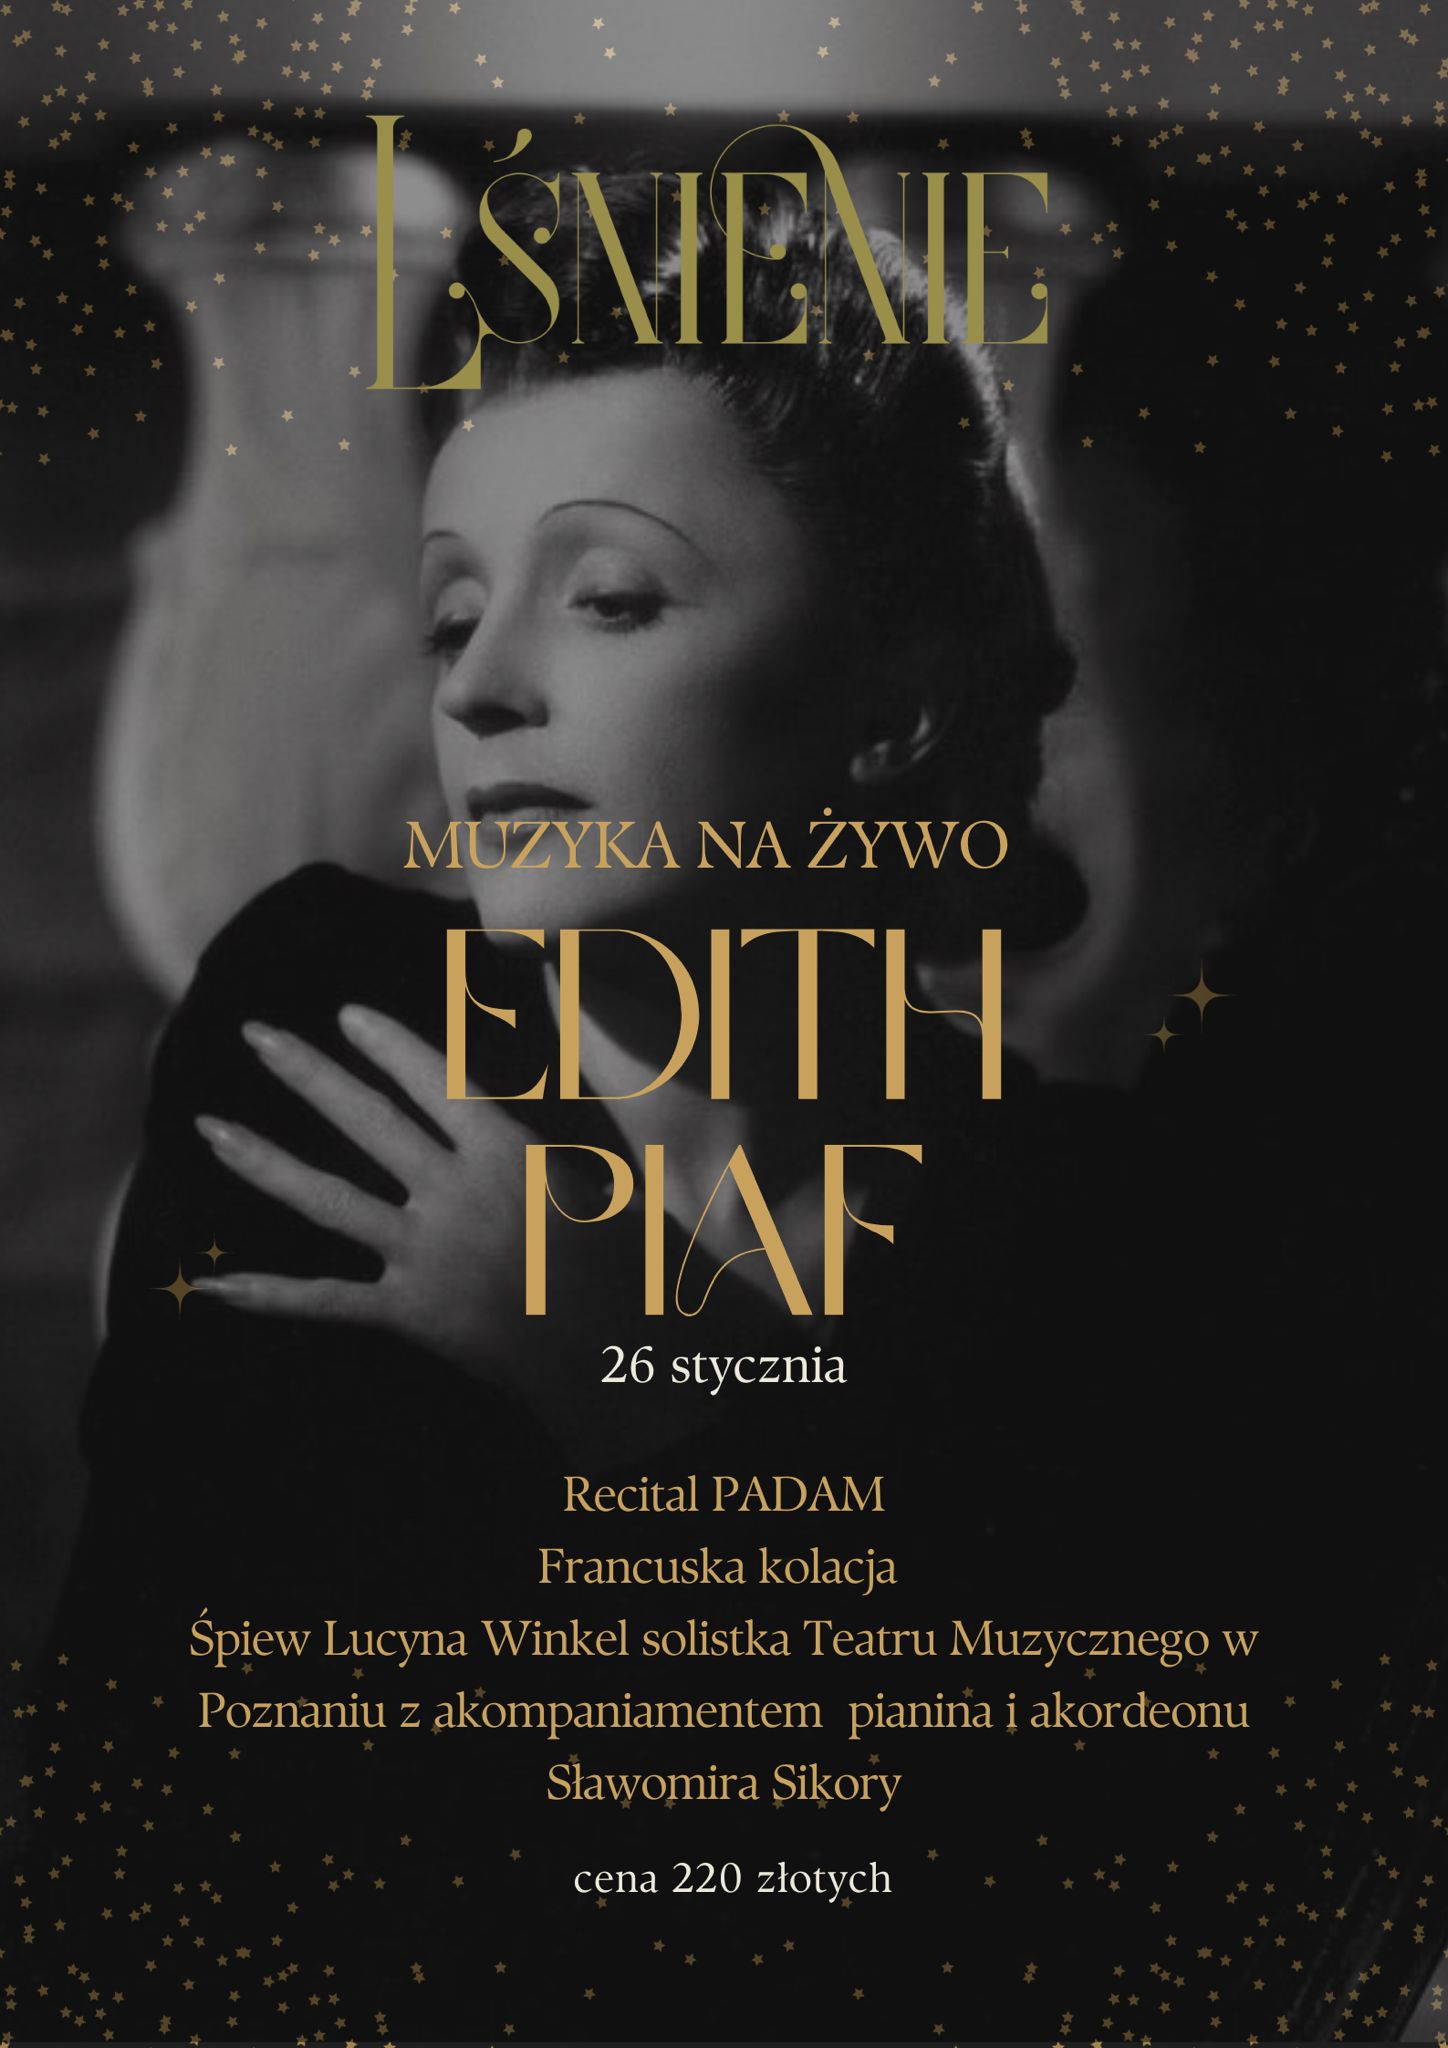 Plakat Edith Piaf.JPG